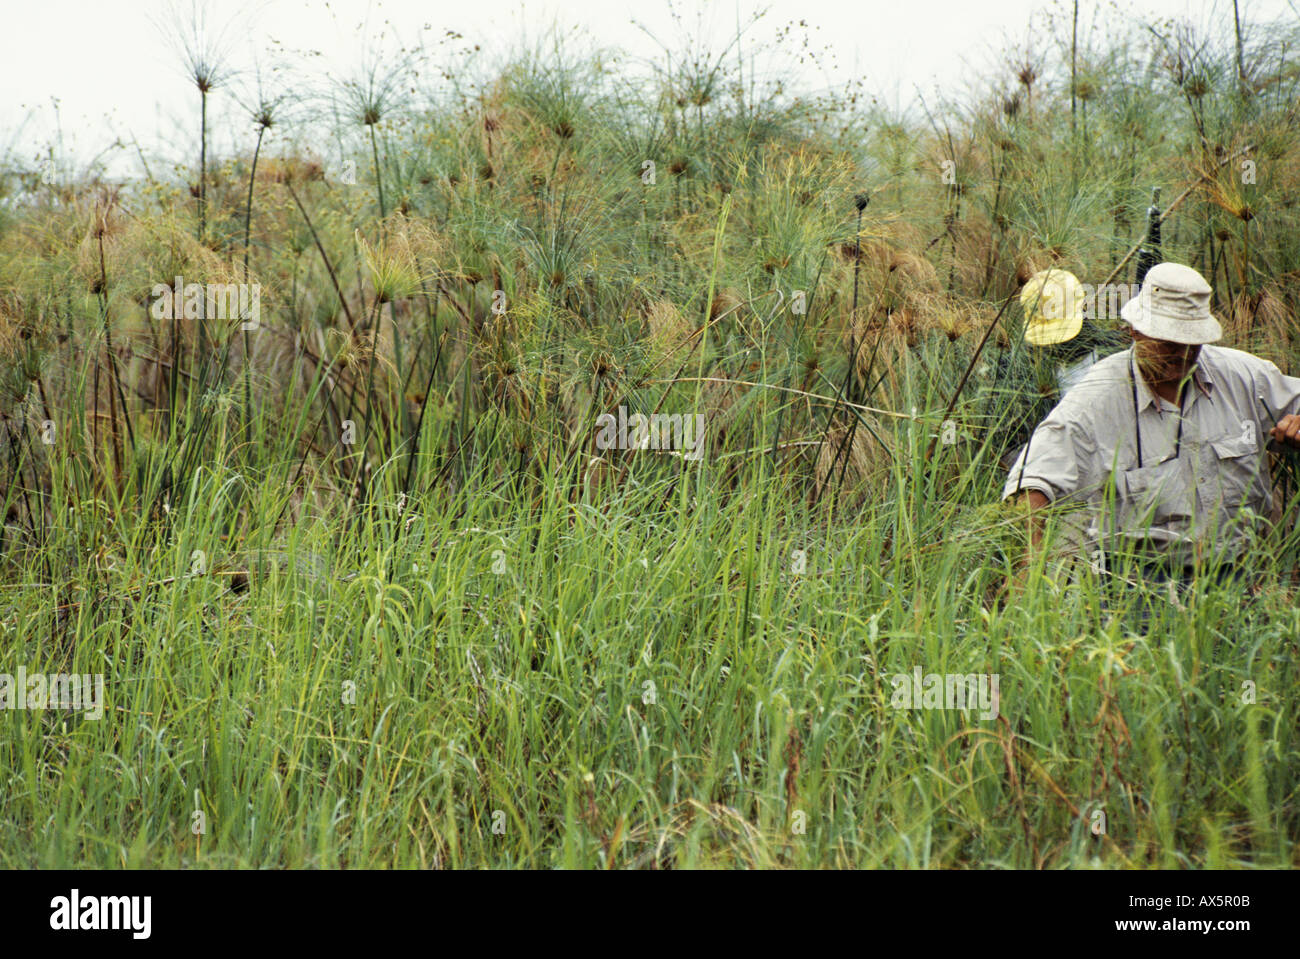 Bangweulu Swamp, Zambia. Tourist on safari with armed escort pushing through papyrus marshlands. Stock Photo